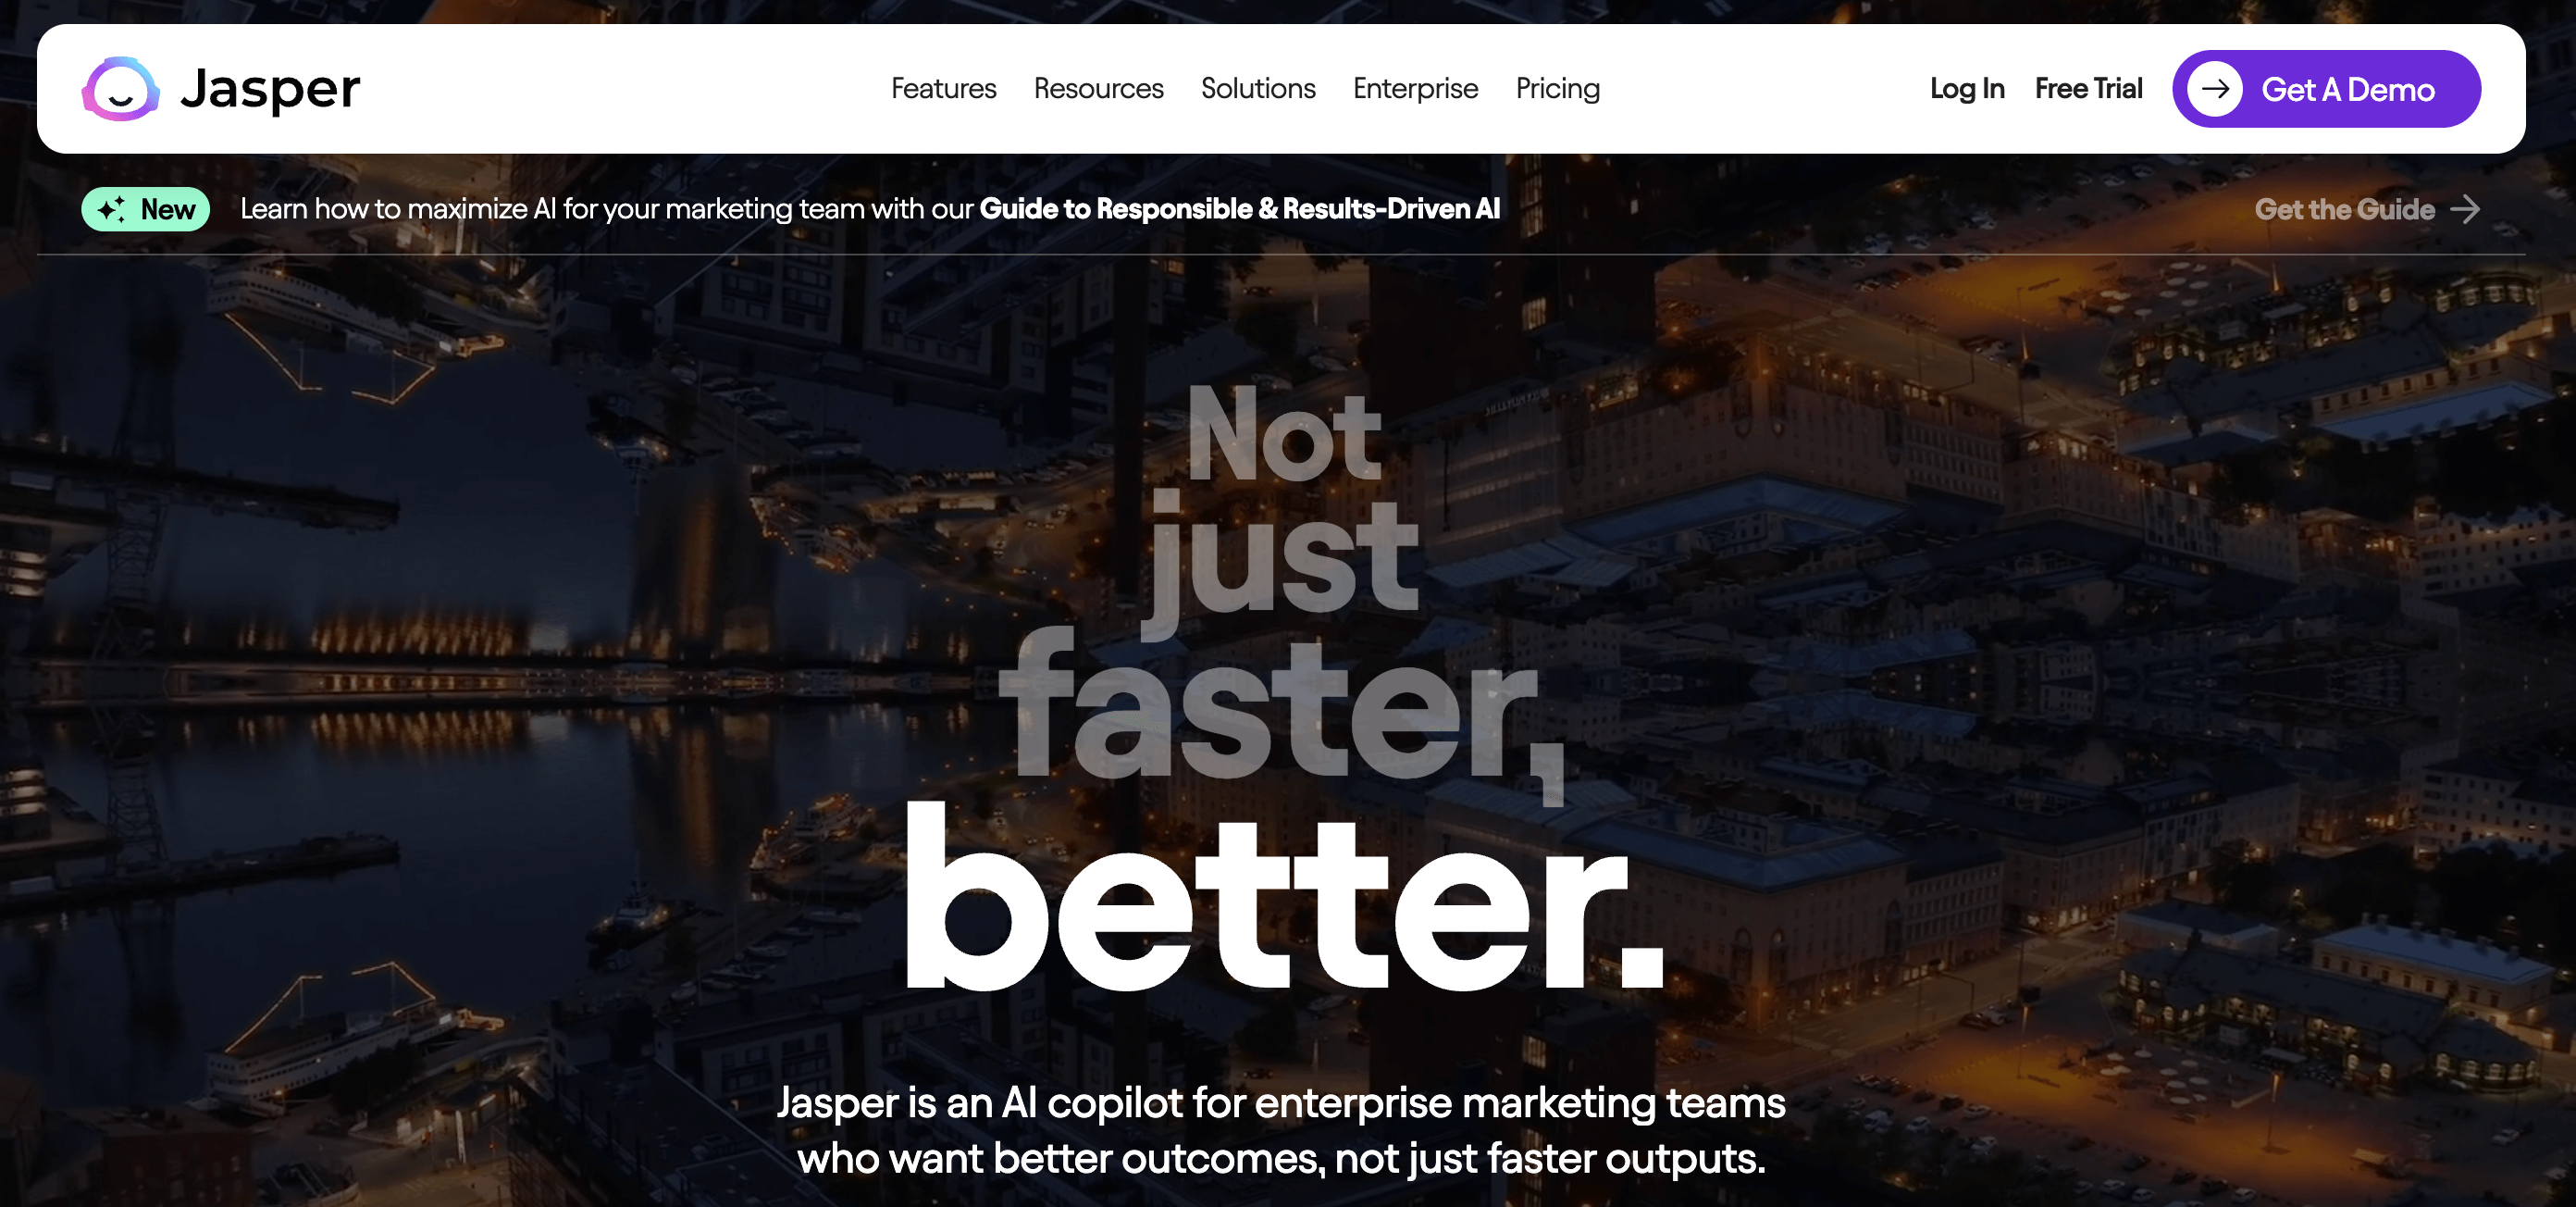 Jasper's homepage